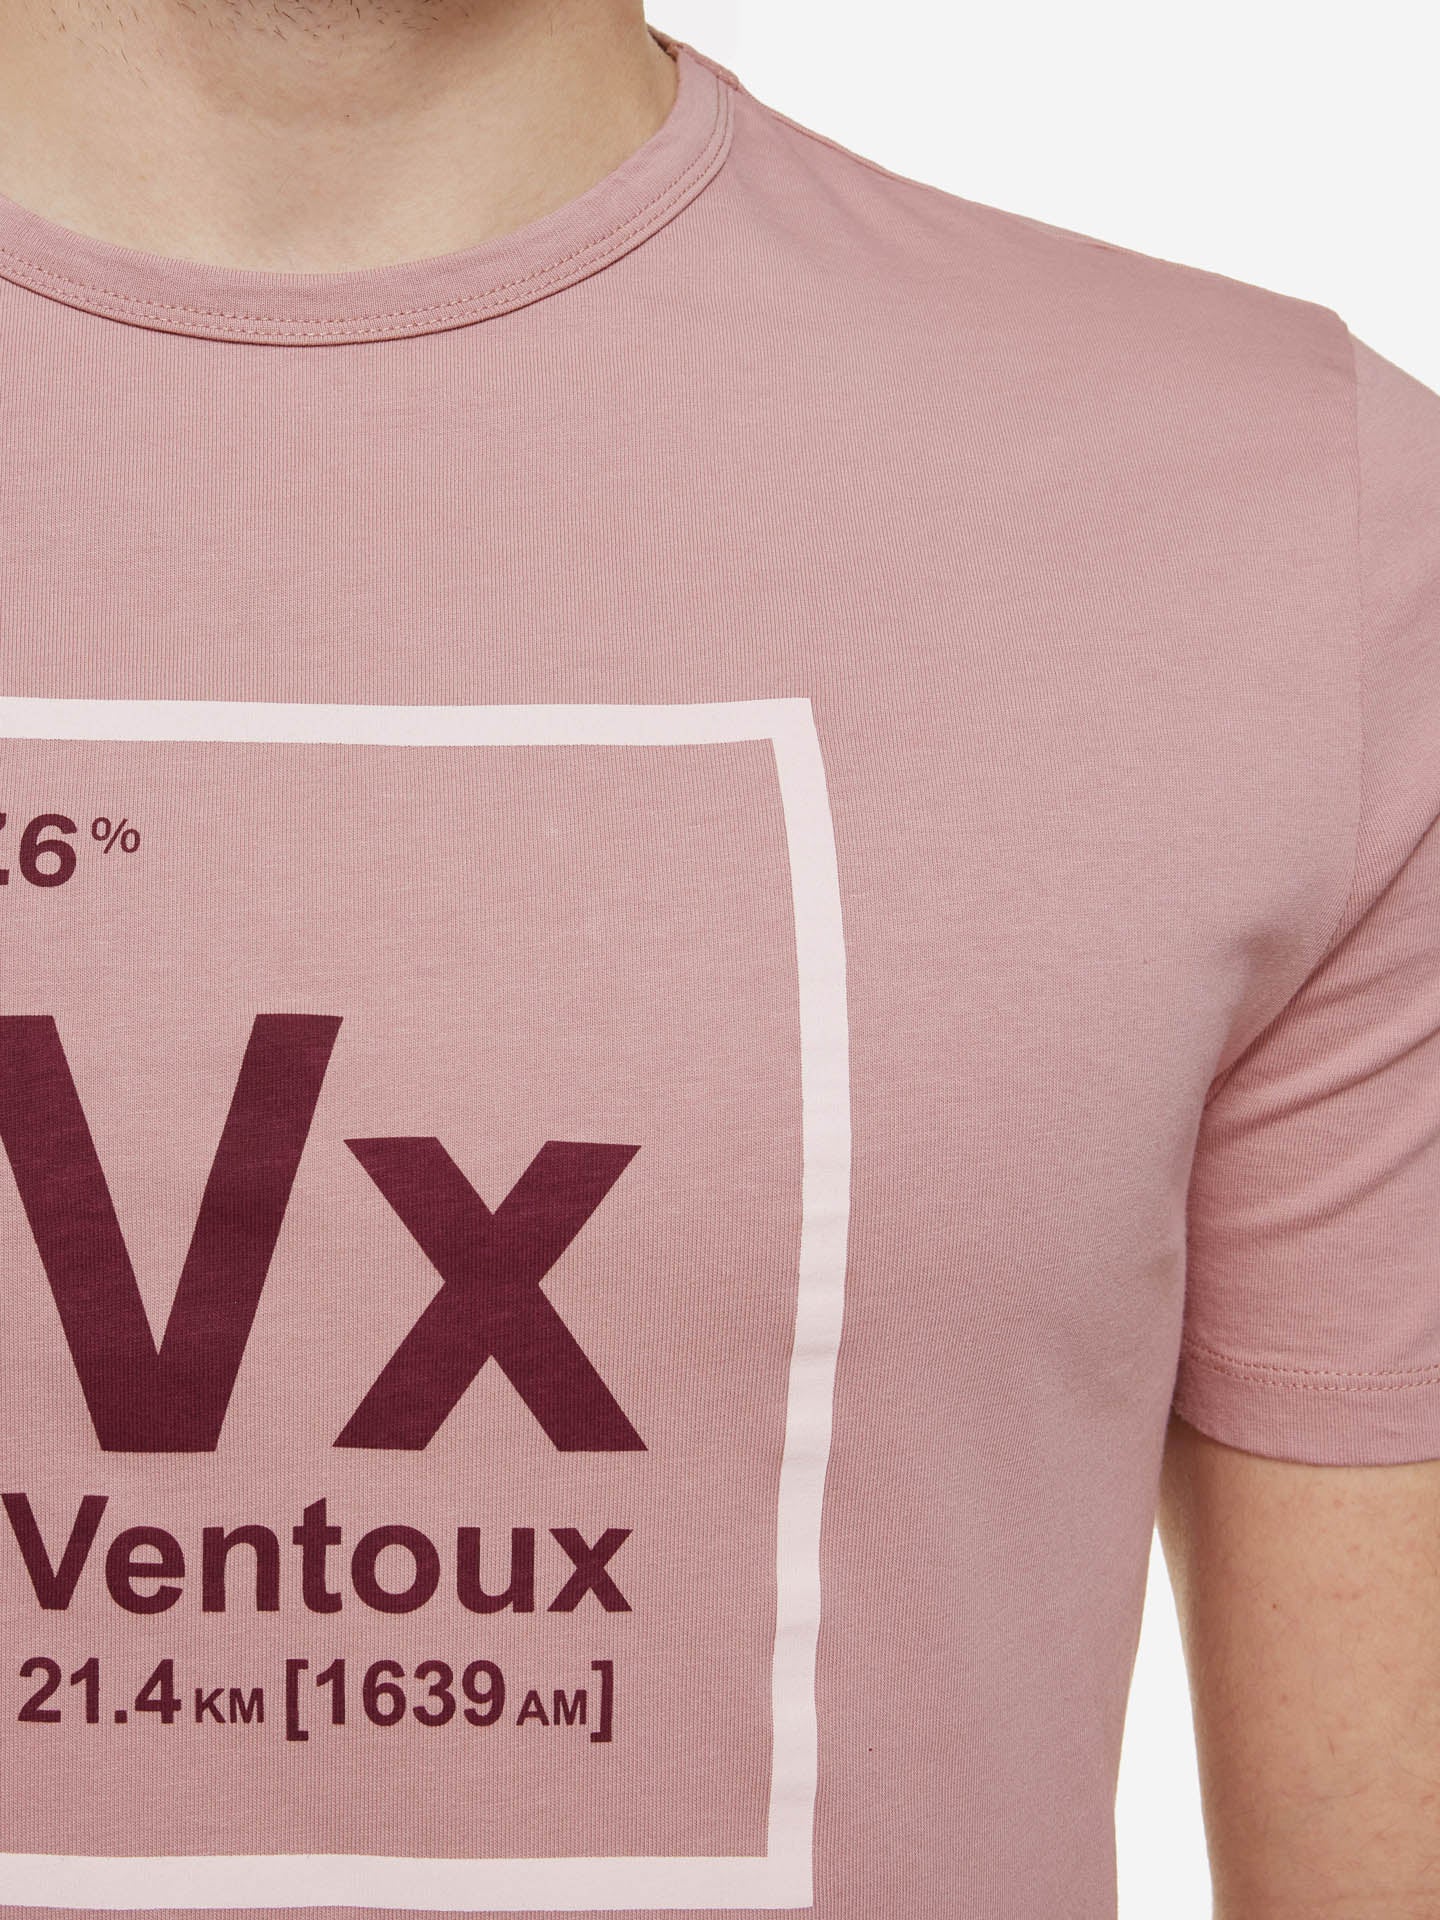 Ventoux - T-shirt -  La Machine Cycle Club.